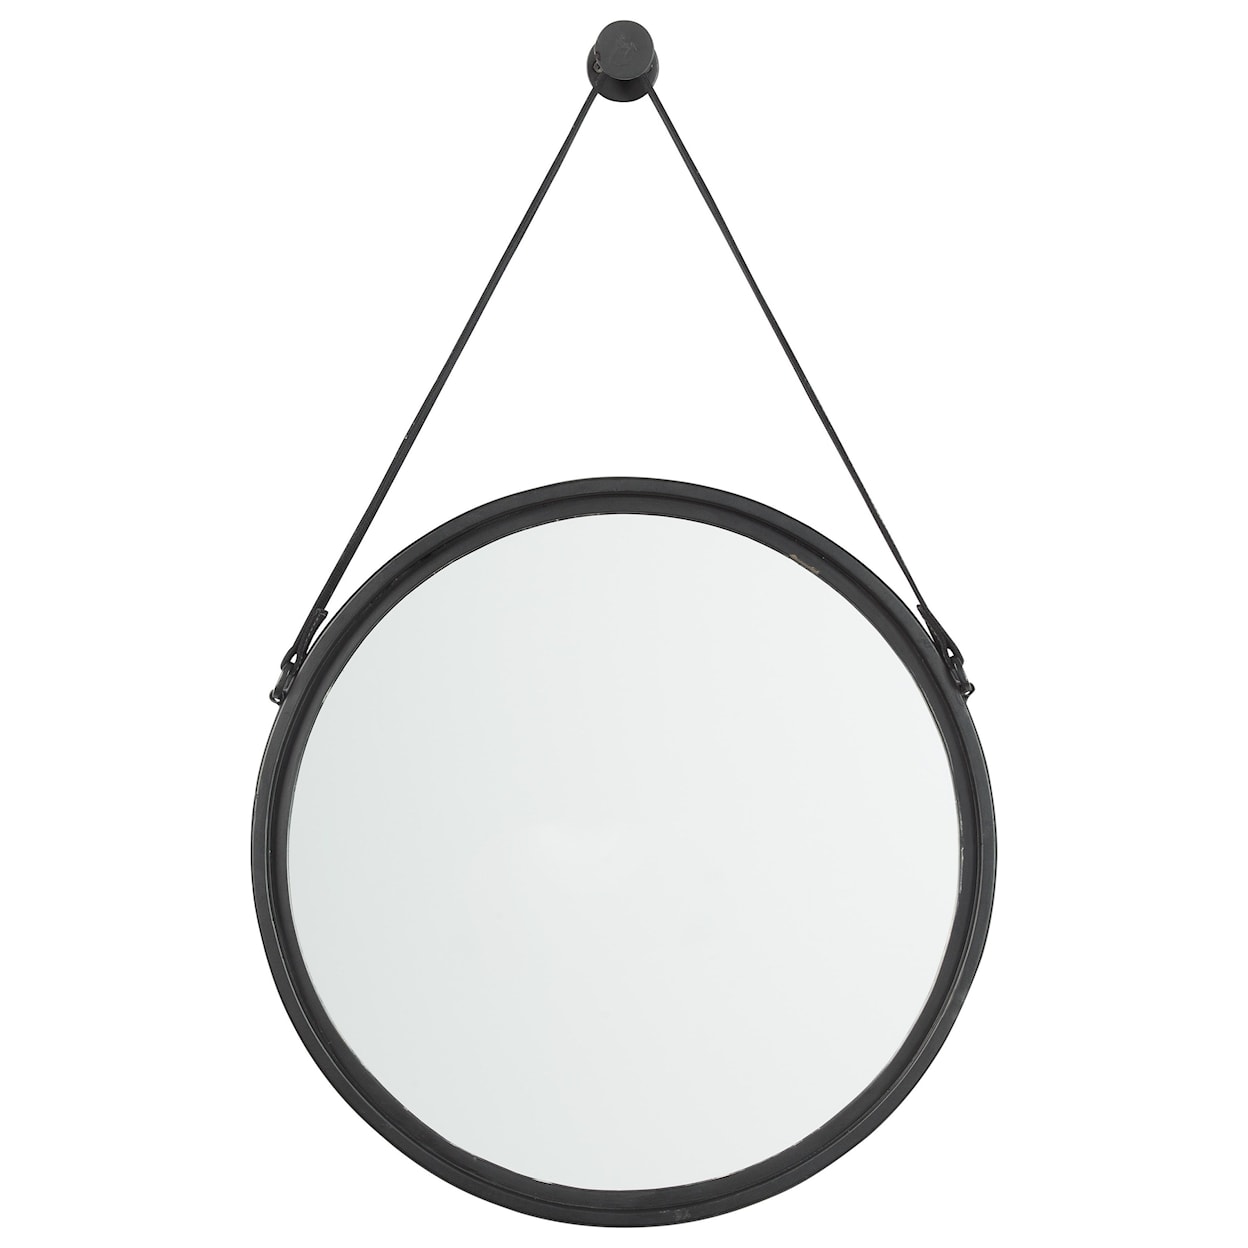 Benchcraft Accent Mirrors Dusan Black Accent Mirror